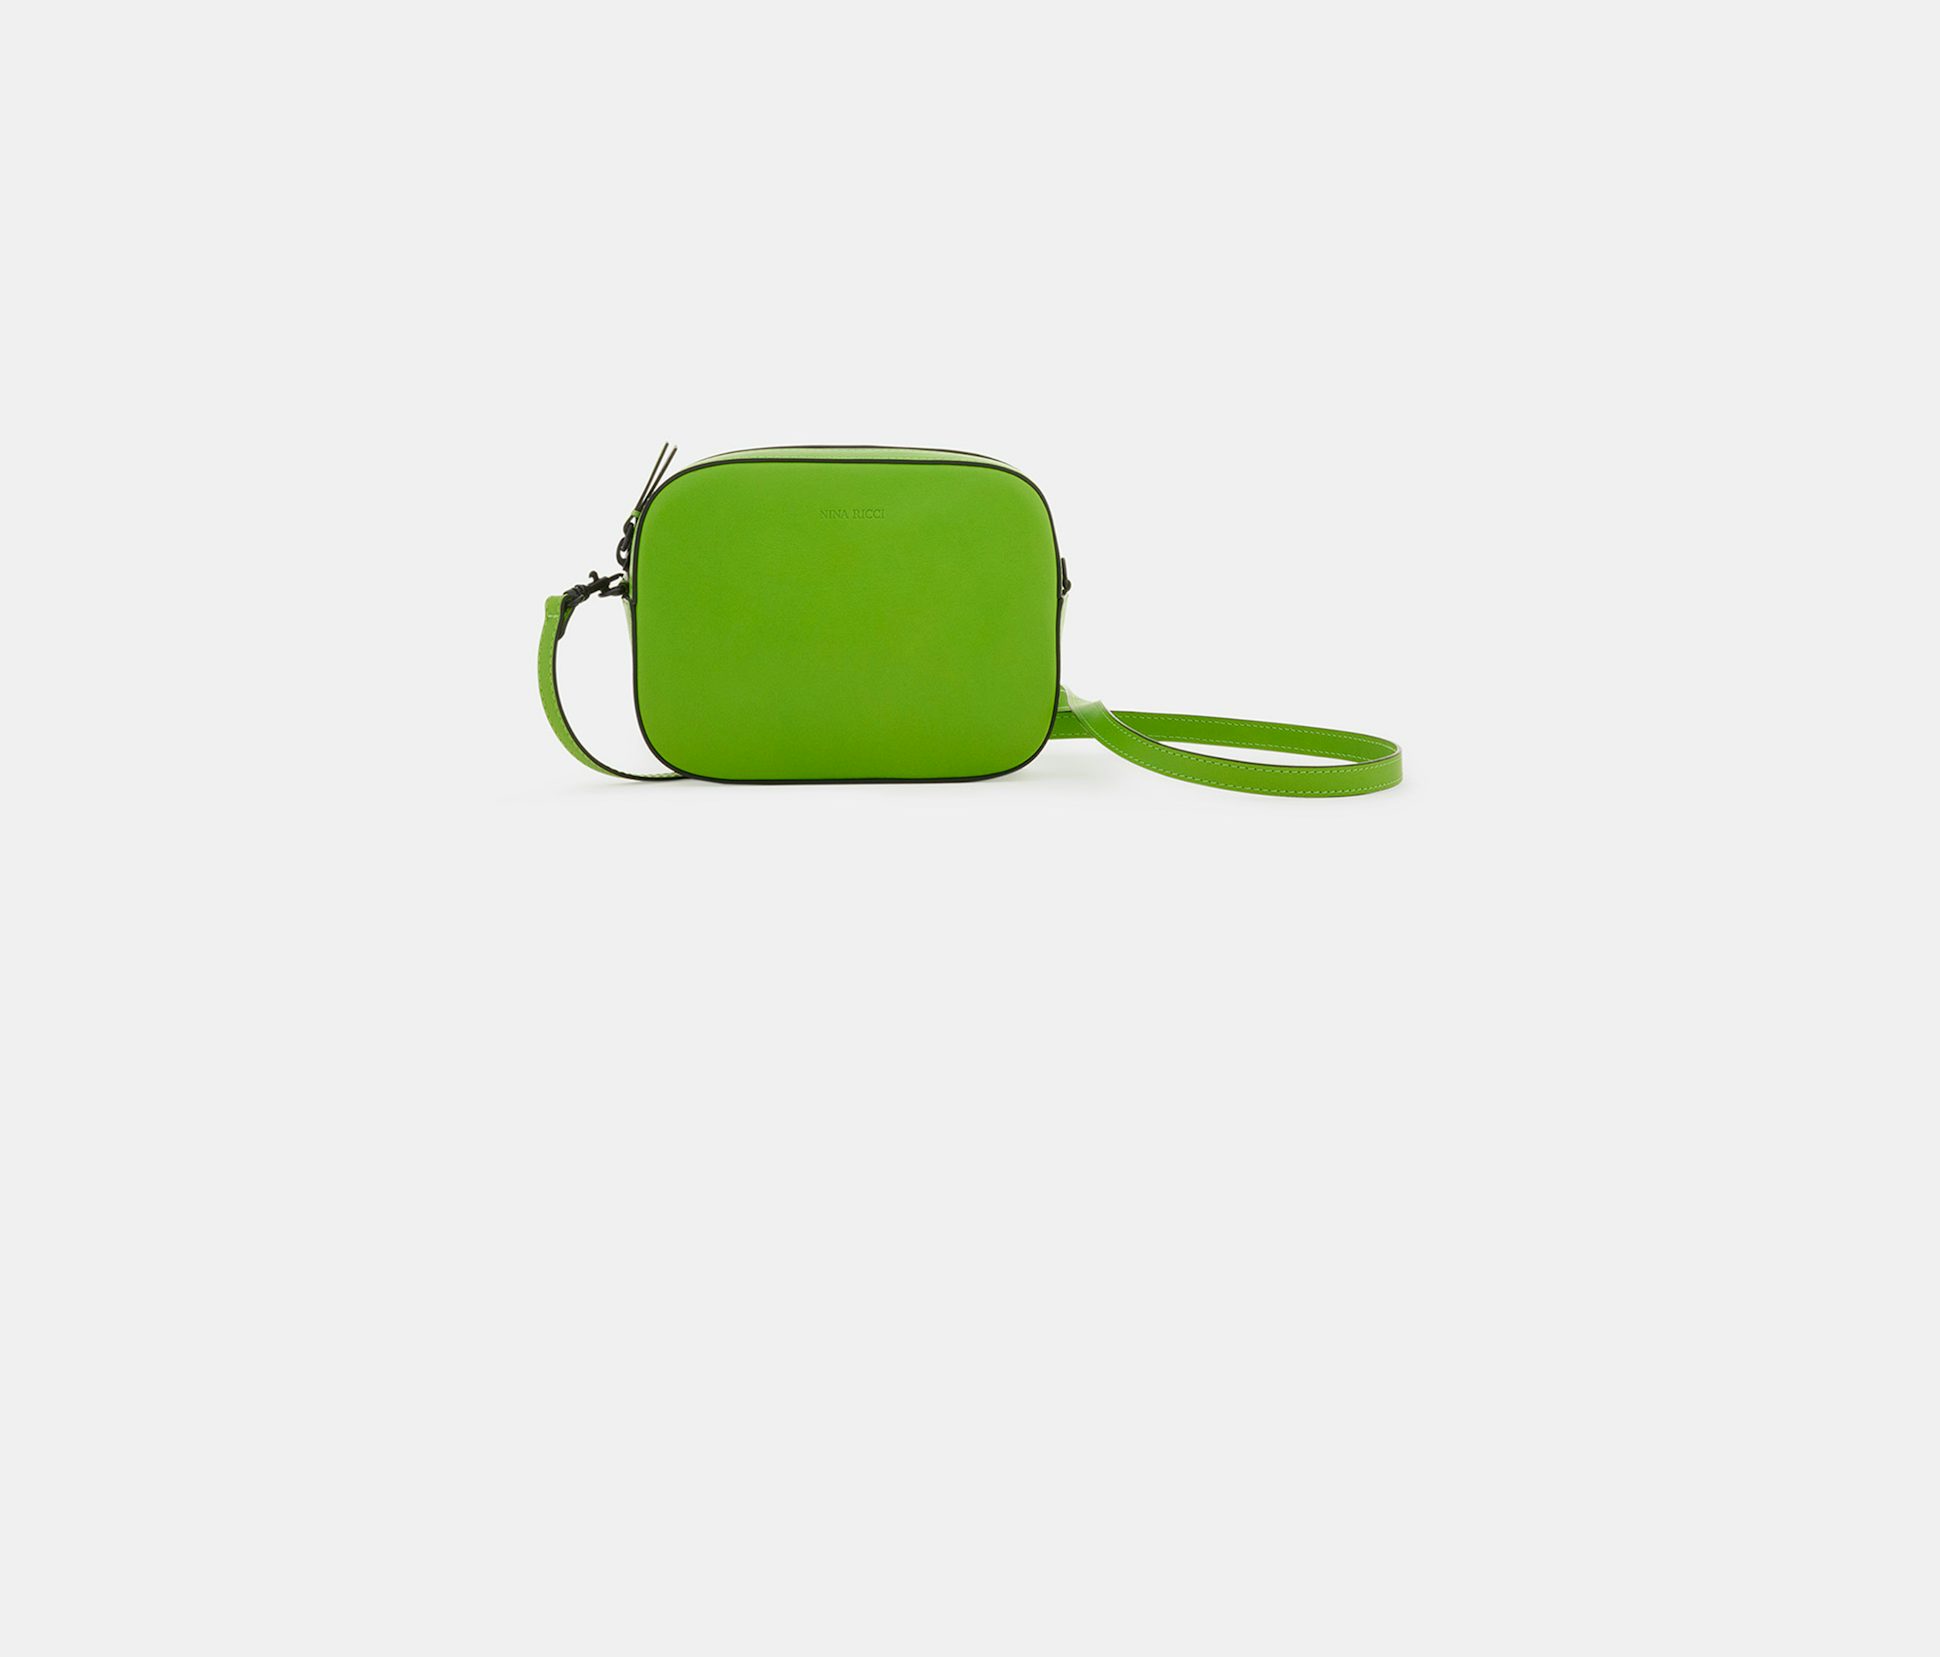 Green Leather Camera Bag with Shoulder Strap - Nina Ricci